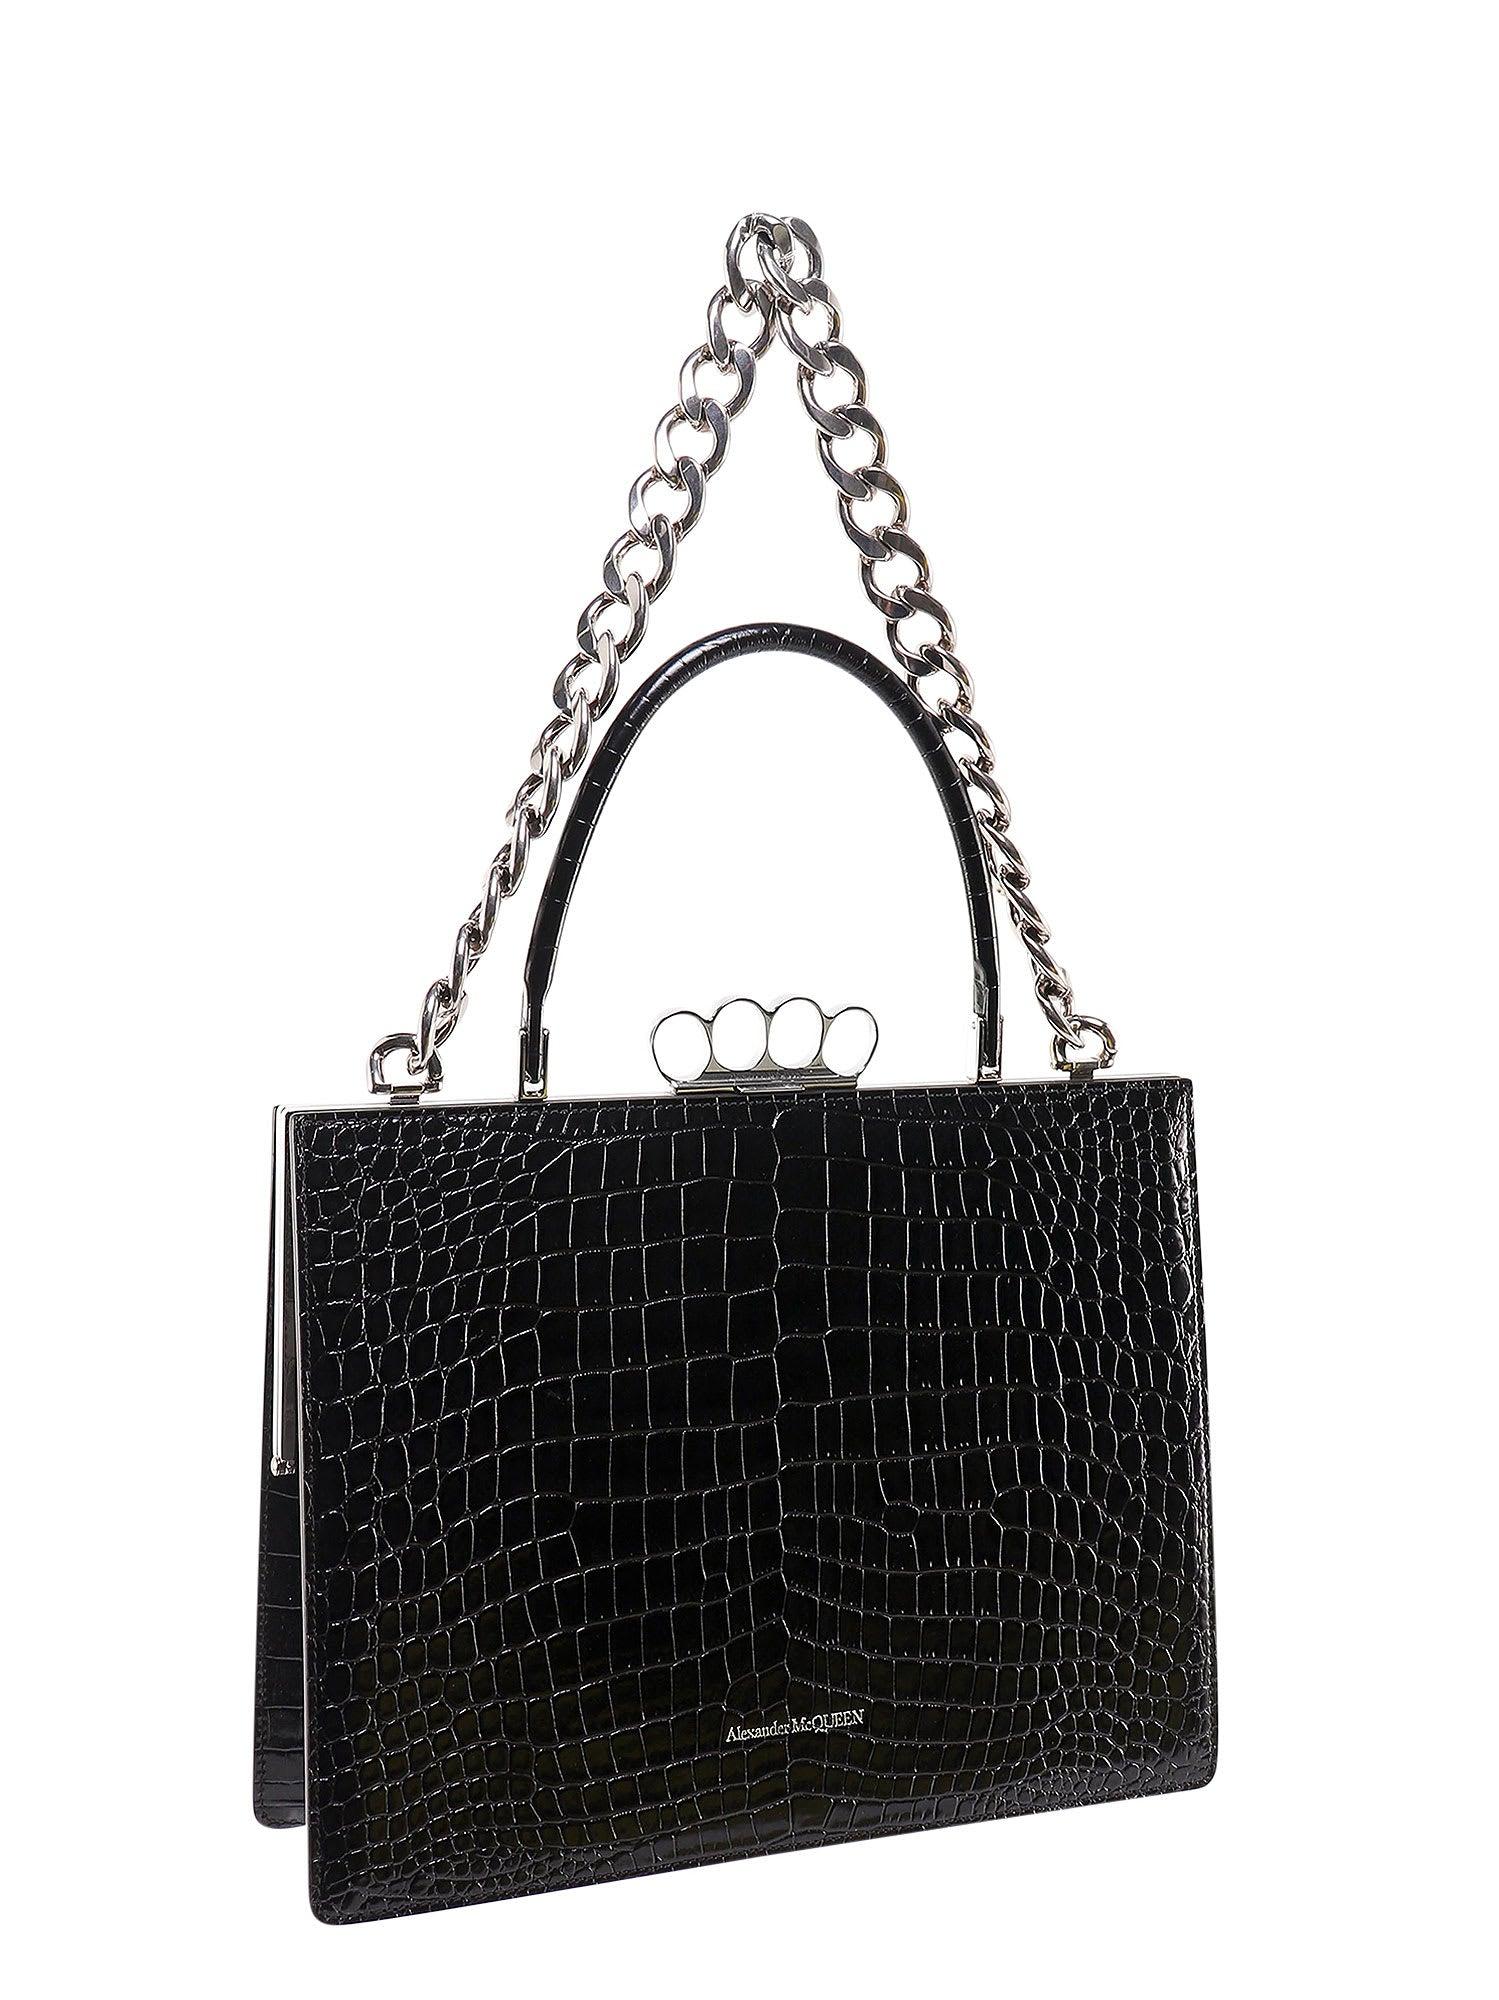 Alexander McQueen Leather The Four Ring Frame Handbag in Black 